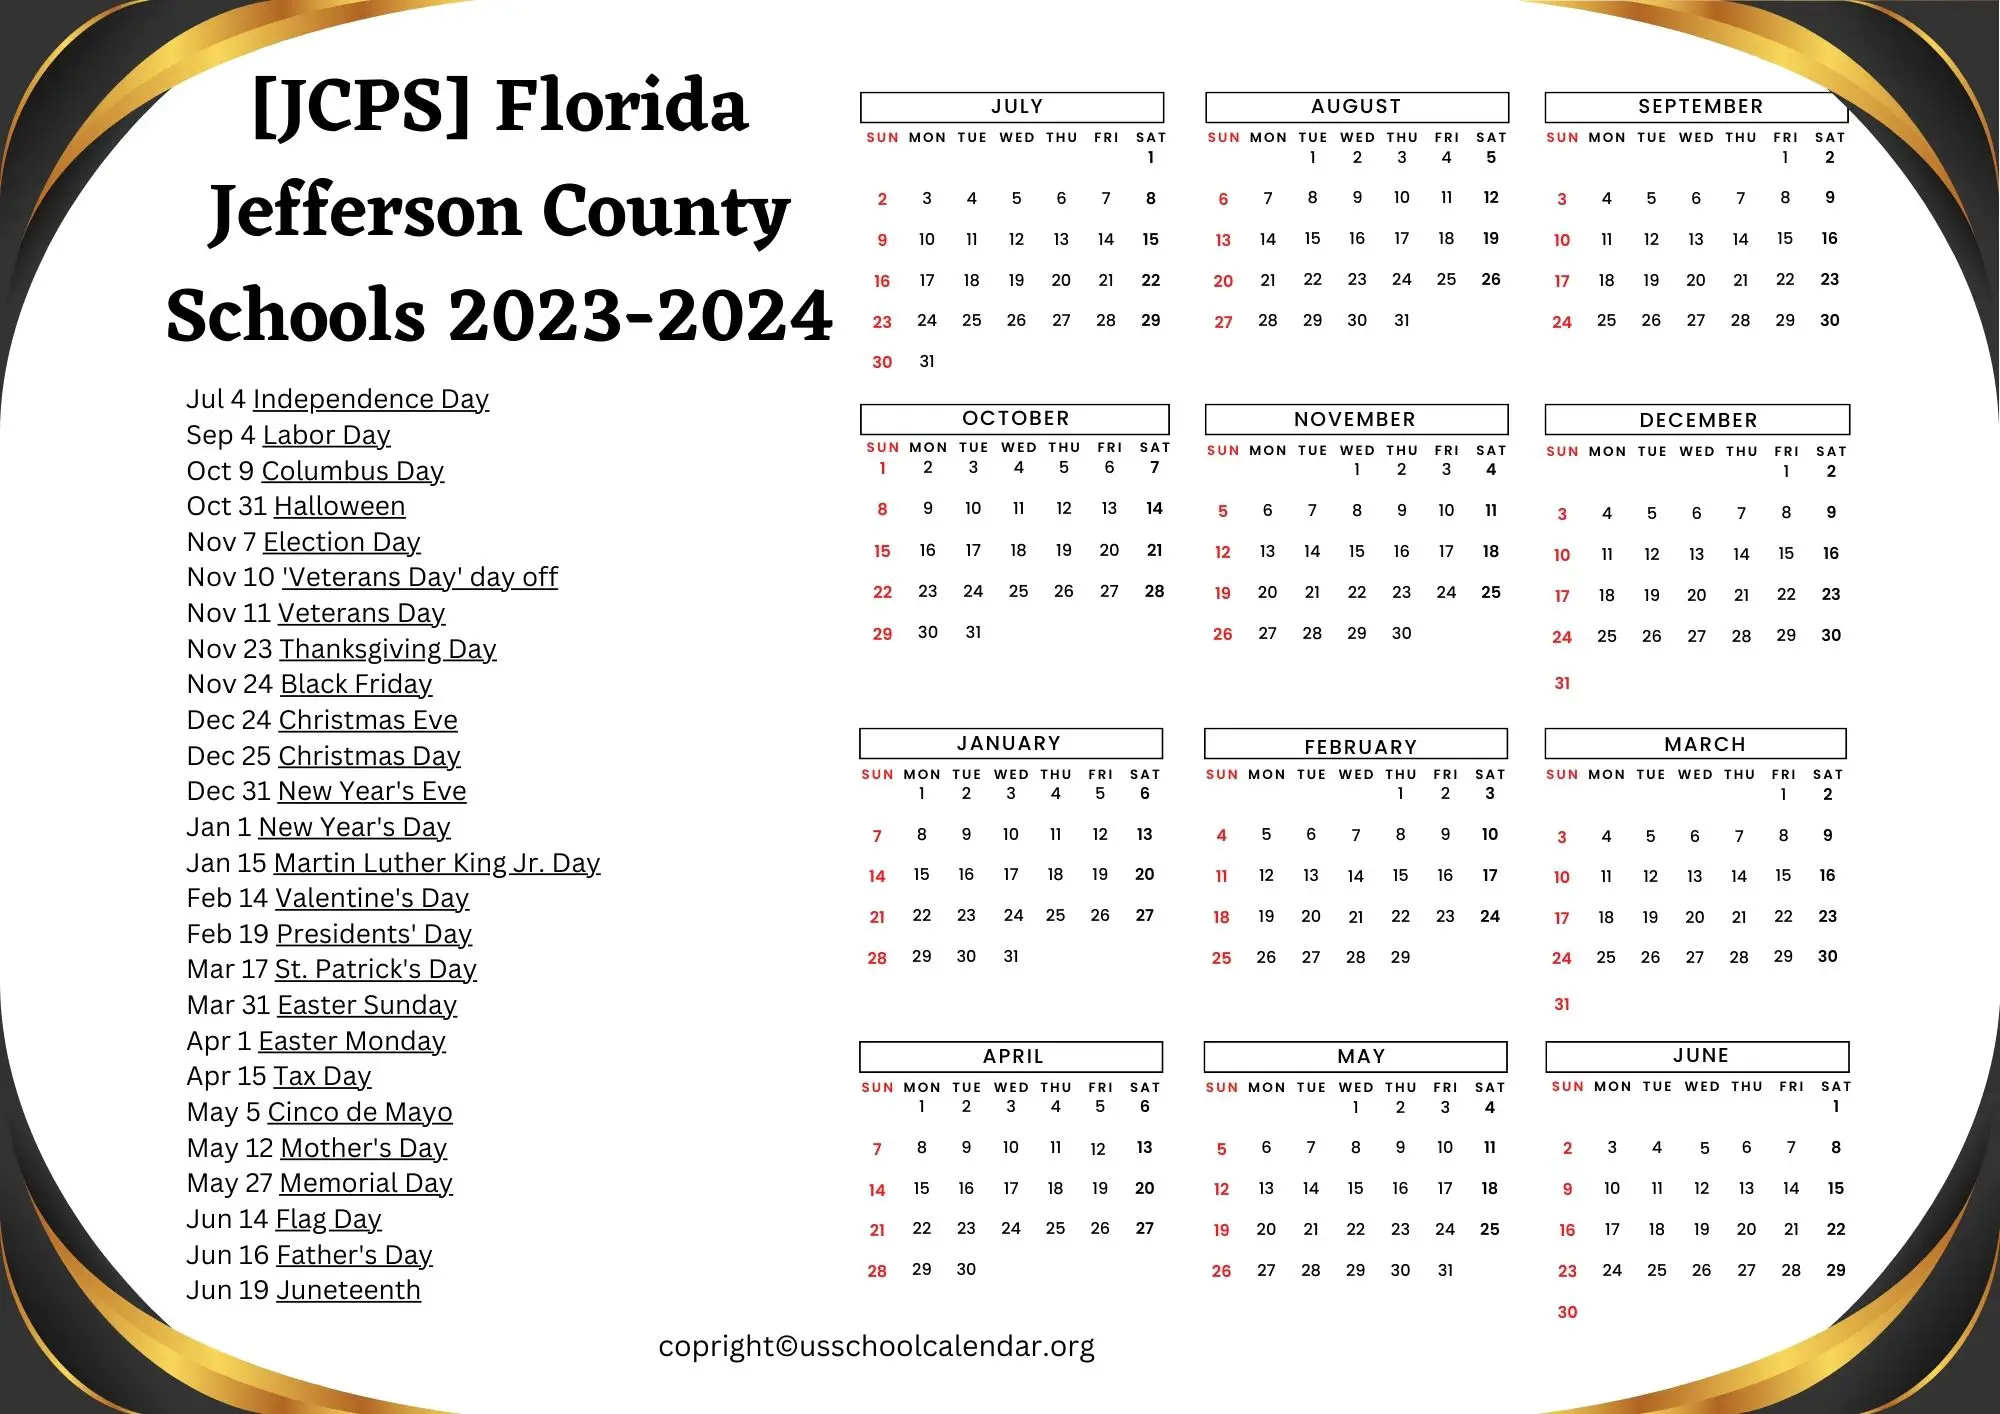 jcps-florida-jefferson-county-schools-calendar-2023-2024